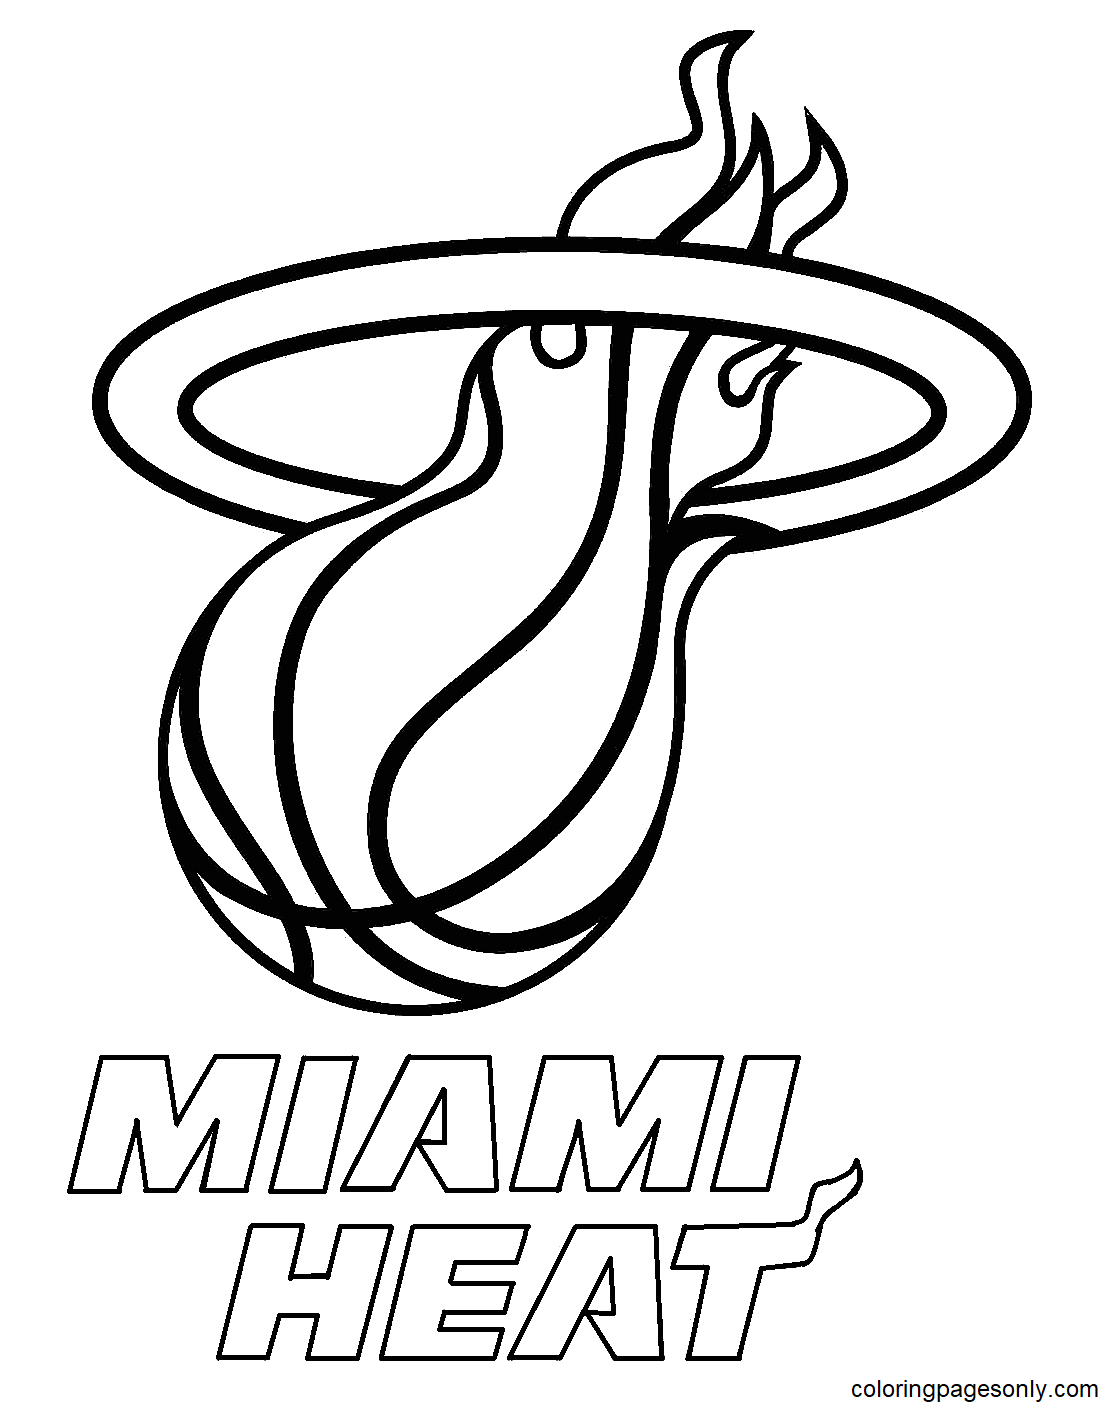 Logotipo do Miami Heat da NBA